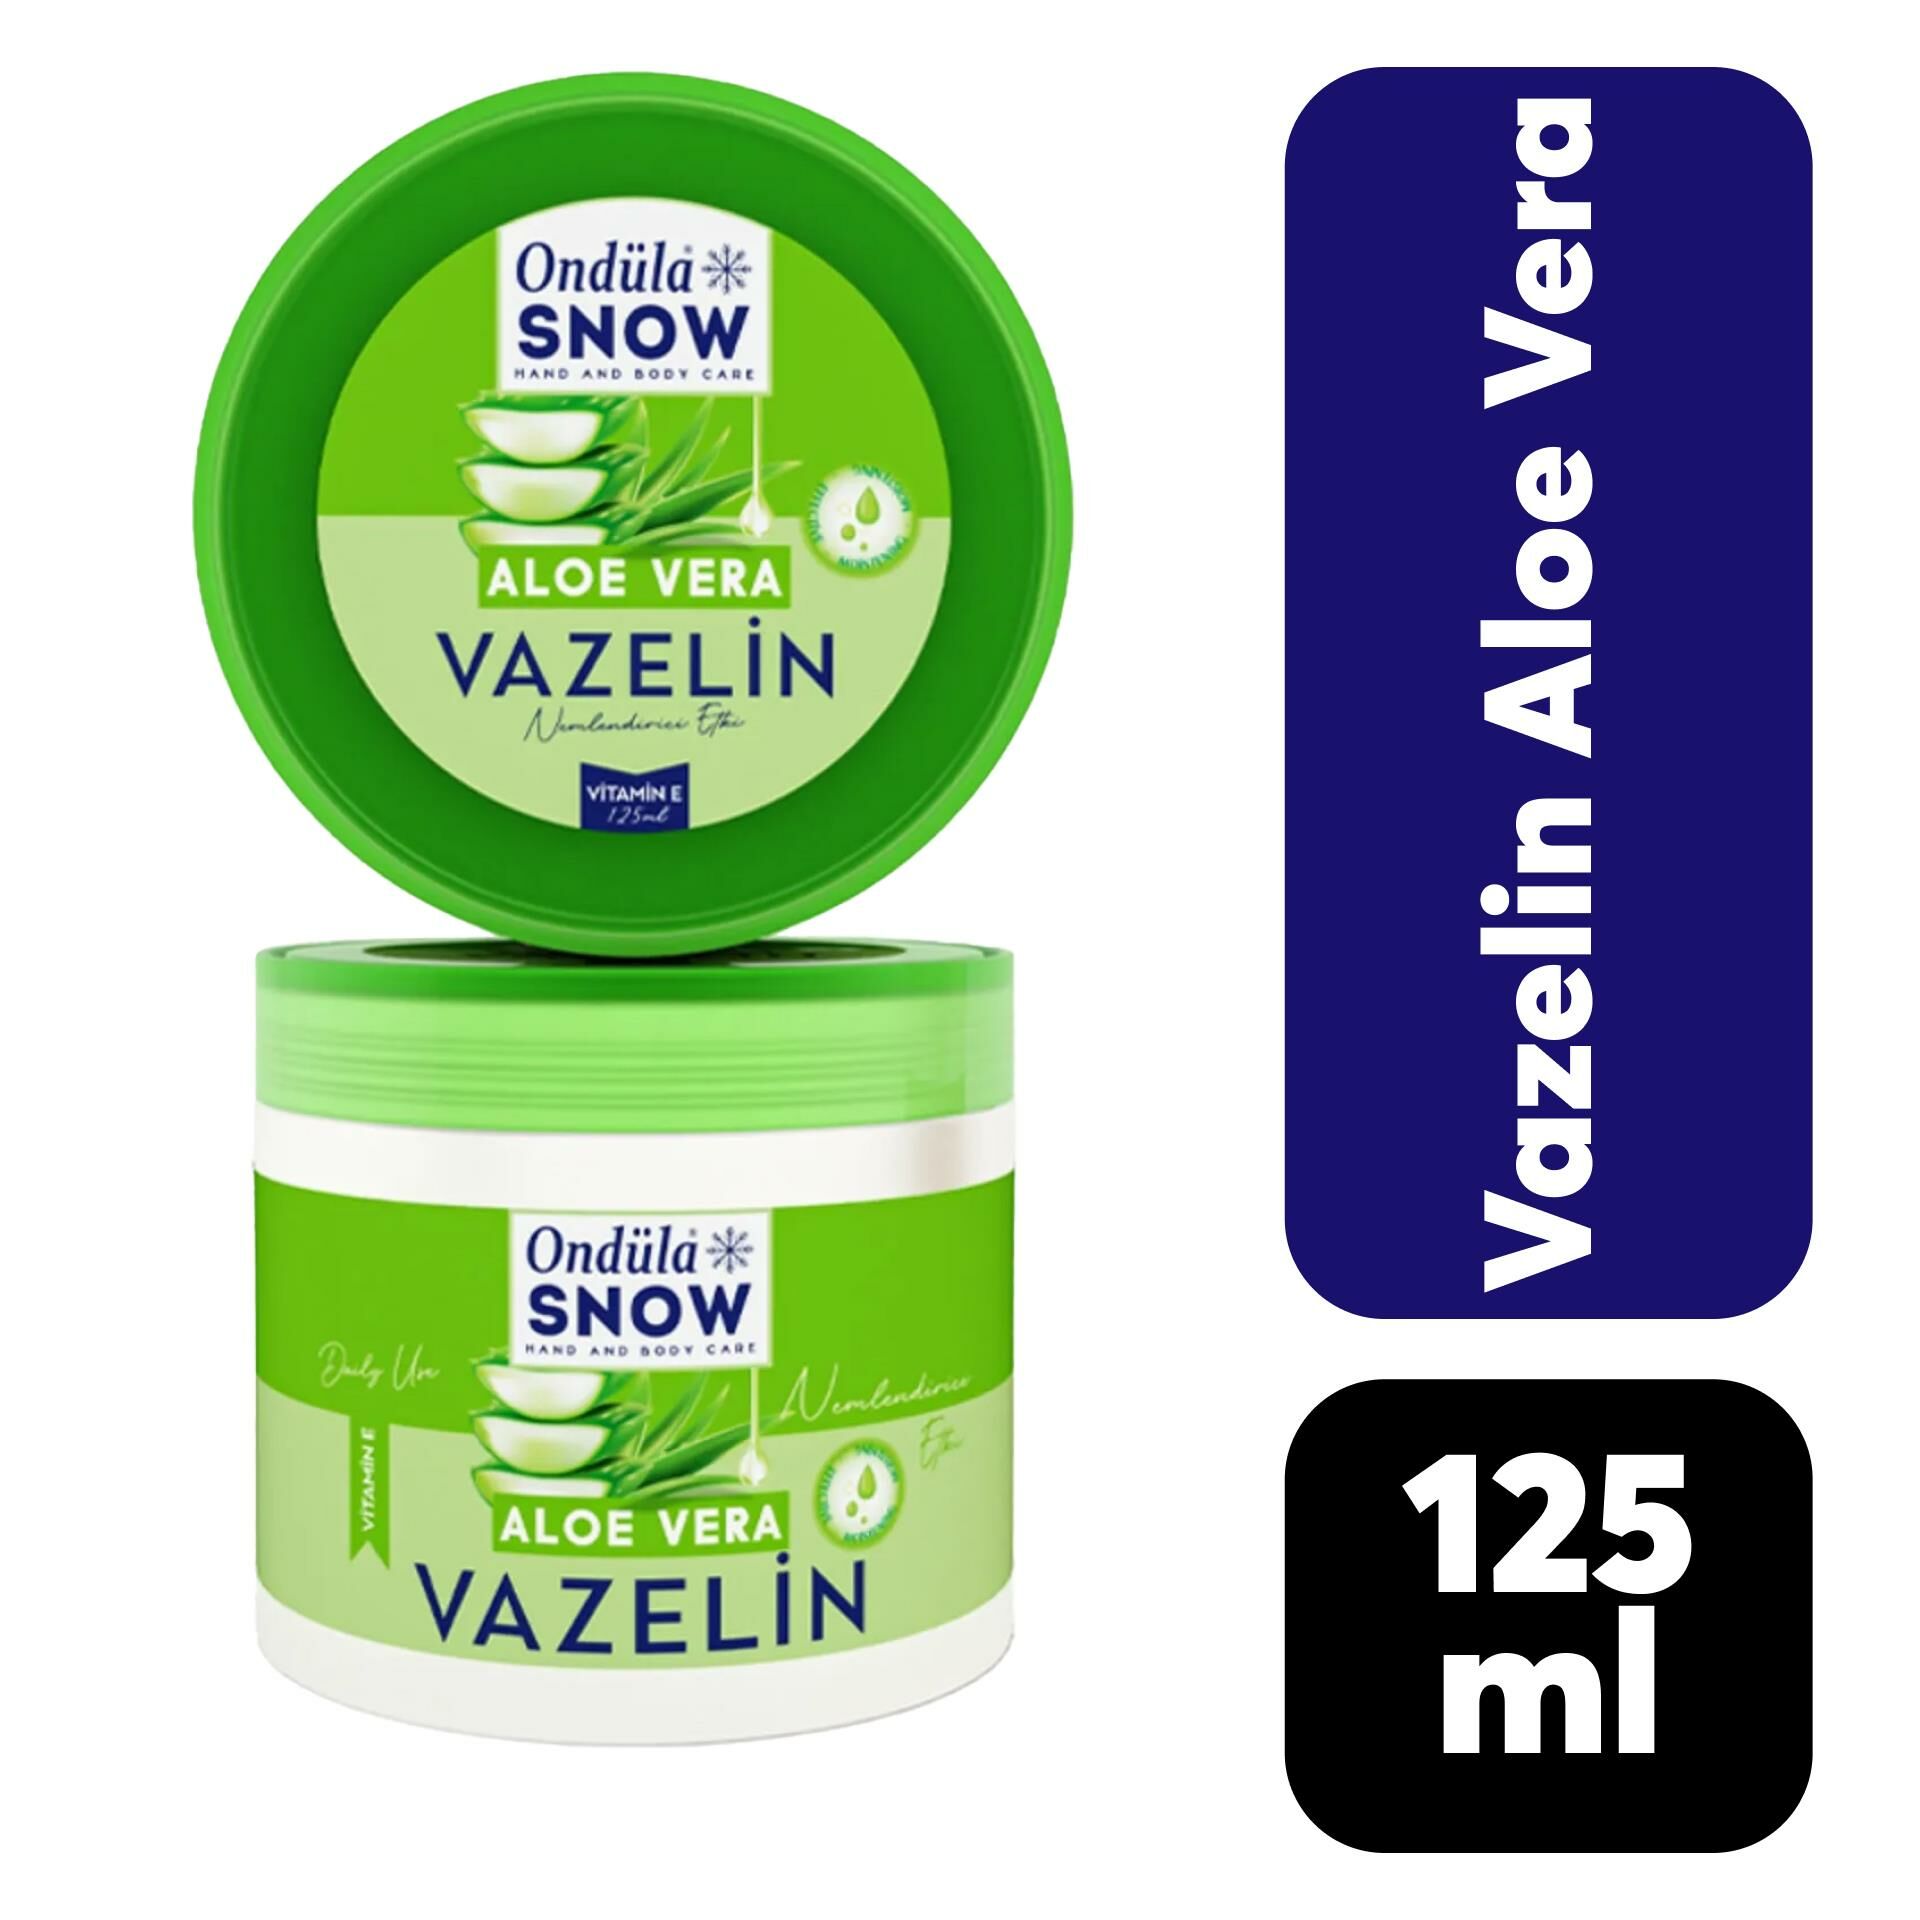 Ondüla Snow Vazelin 125 ml Aloe Vera